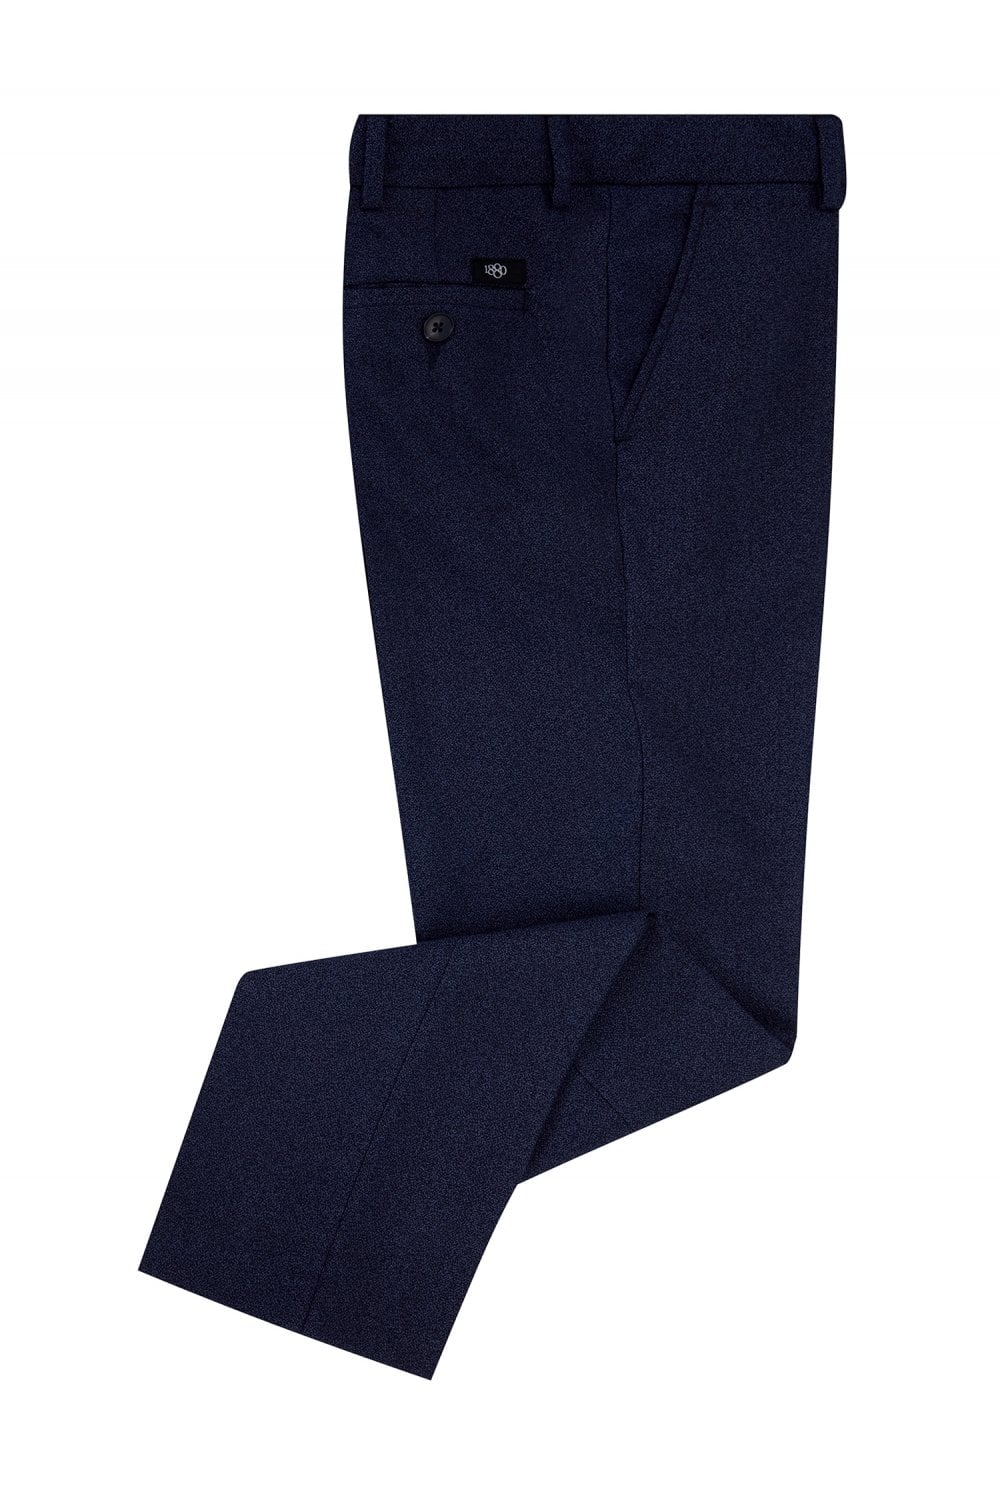 1880 Club Boys Formal Suit Trousers:- Dark Navy